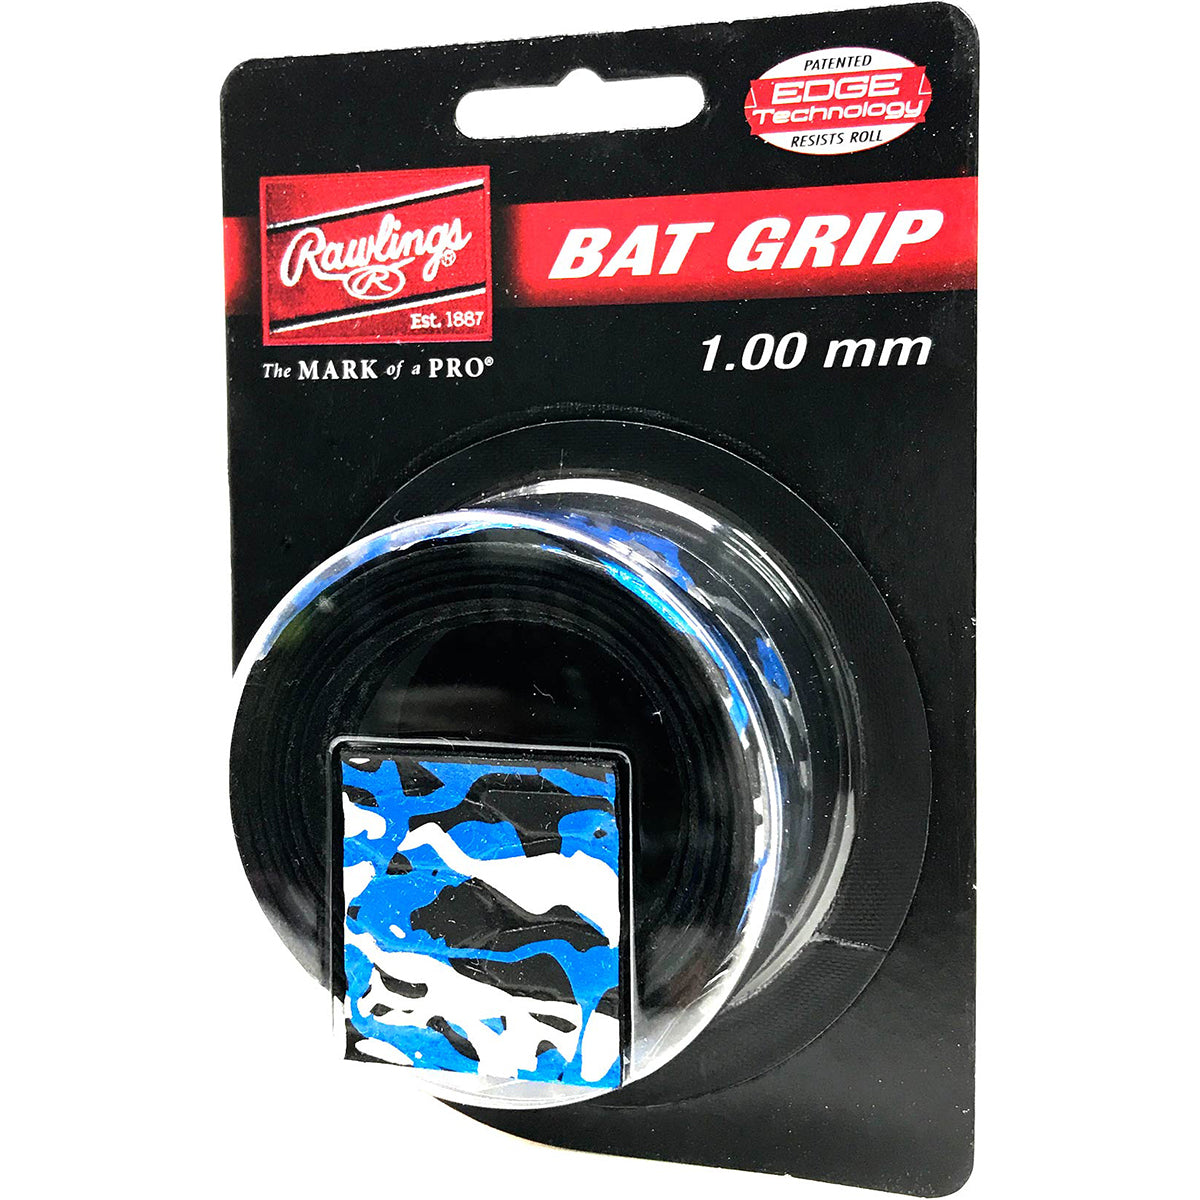 Rawlings Baseball/Softball Bat Grip Tape - Black